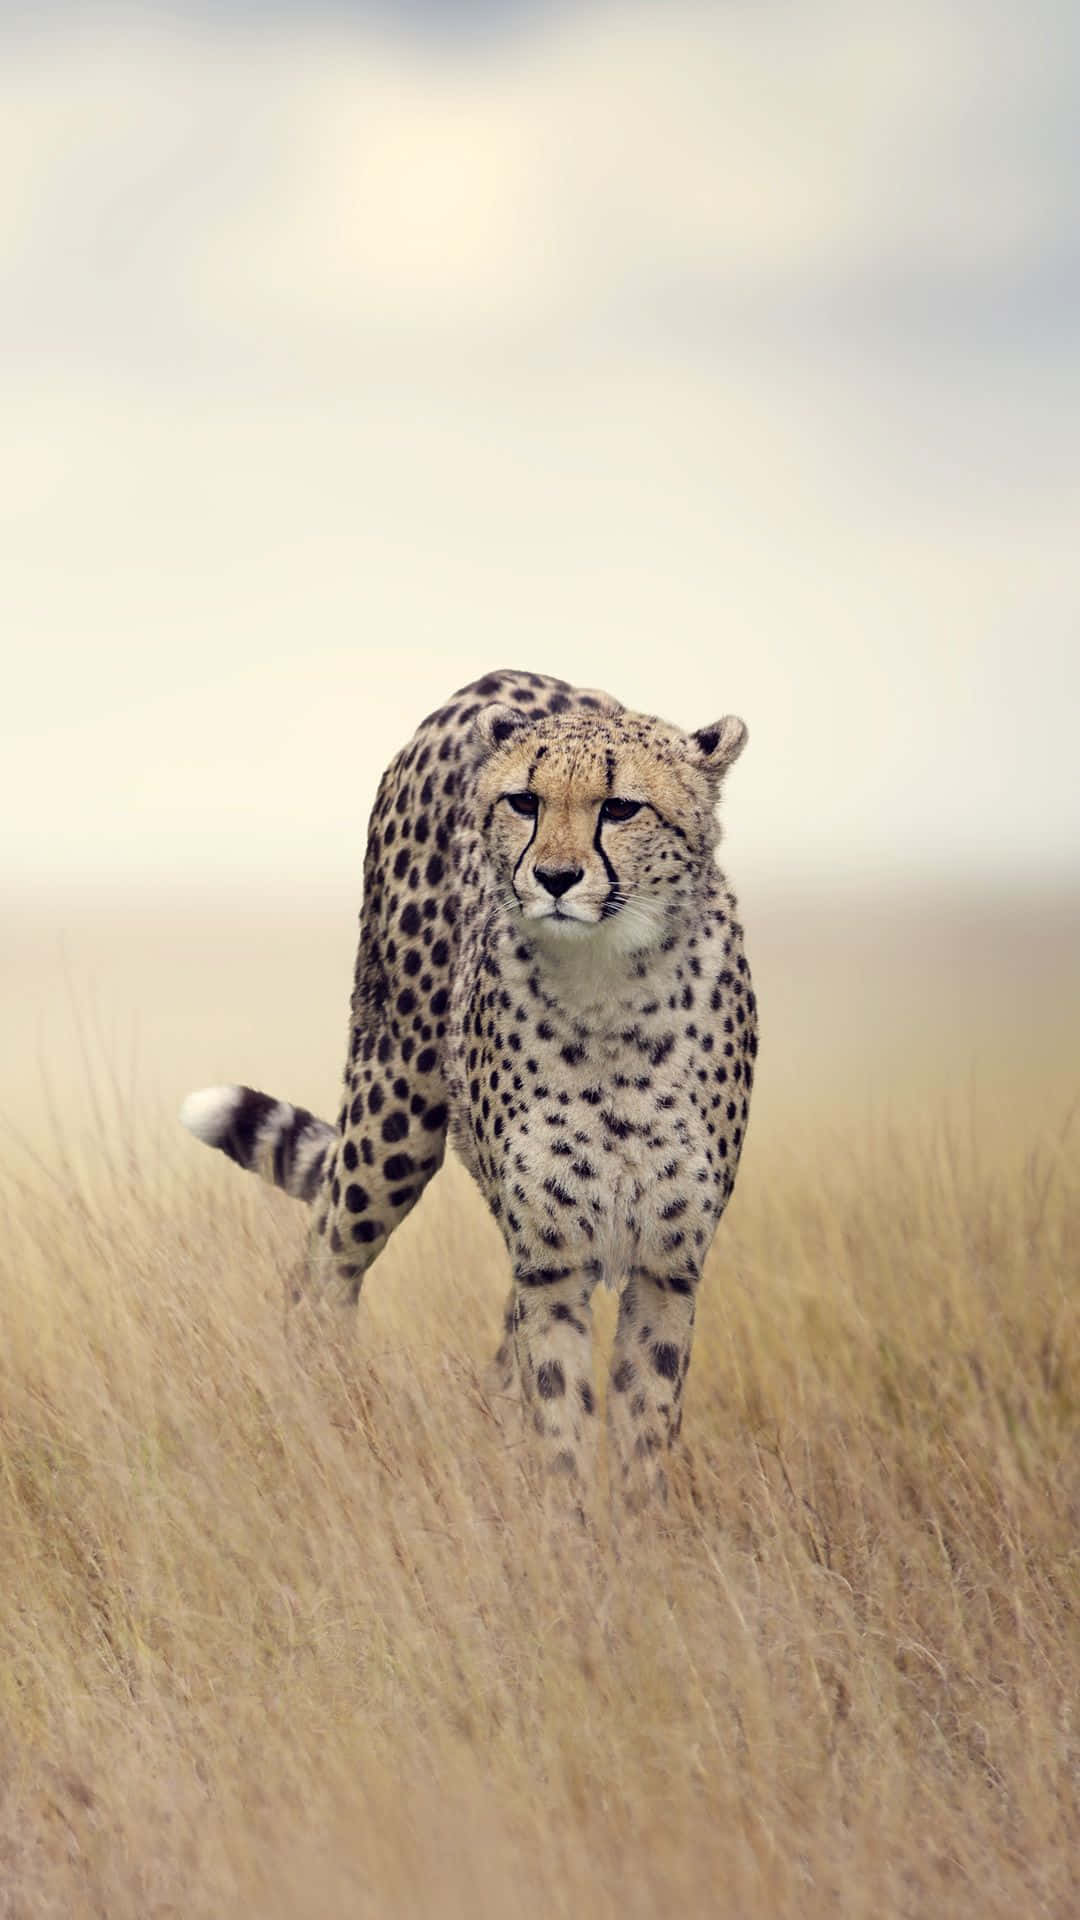 Cheetah wallpaper hd  Cheetah wallpaper, Wild animal wallpaper, Leopard  pictures